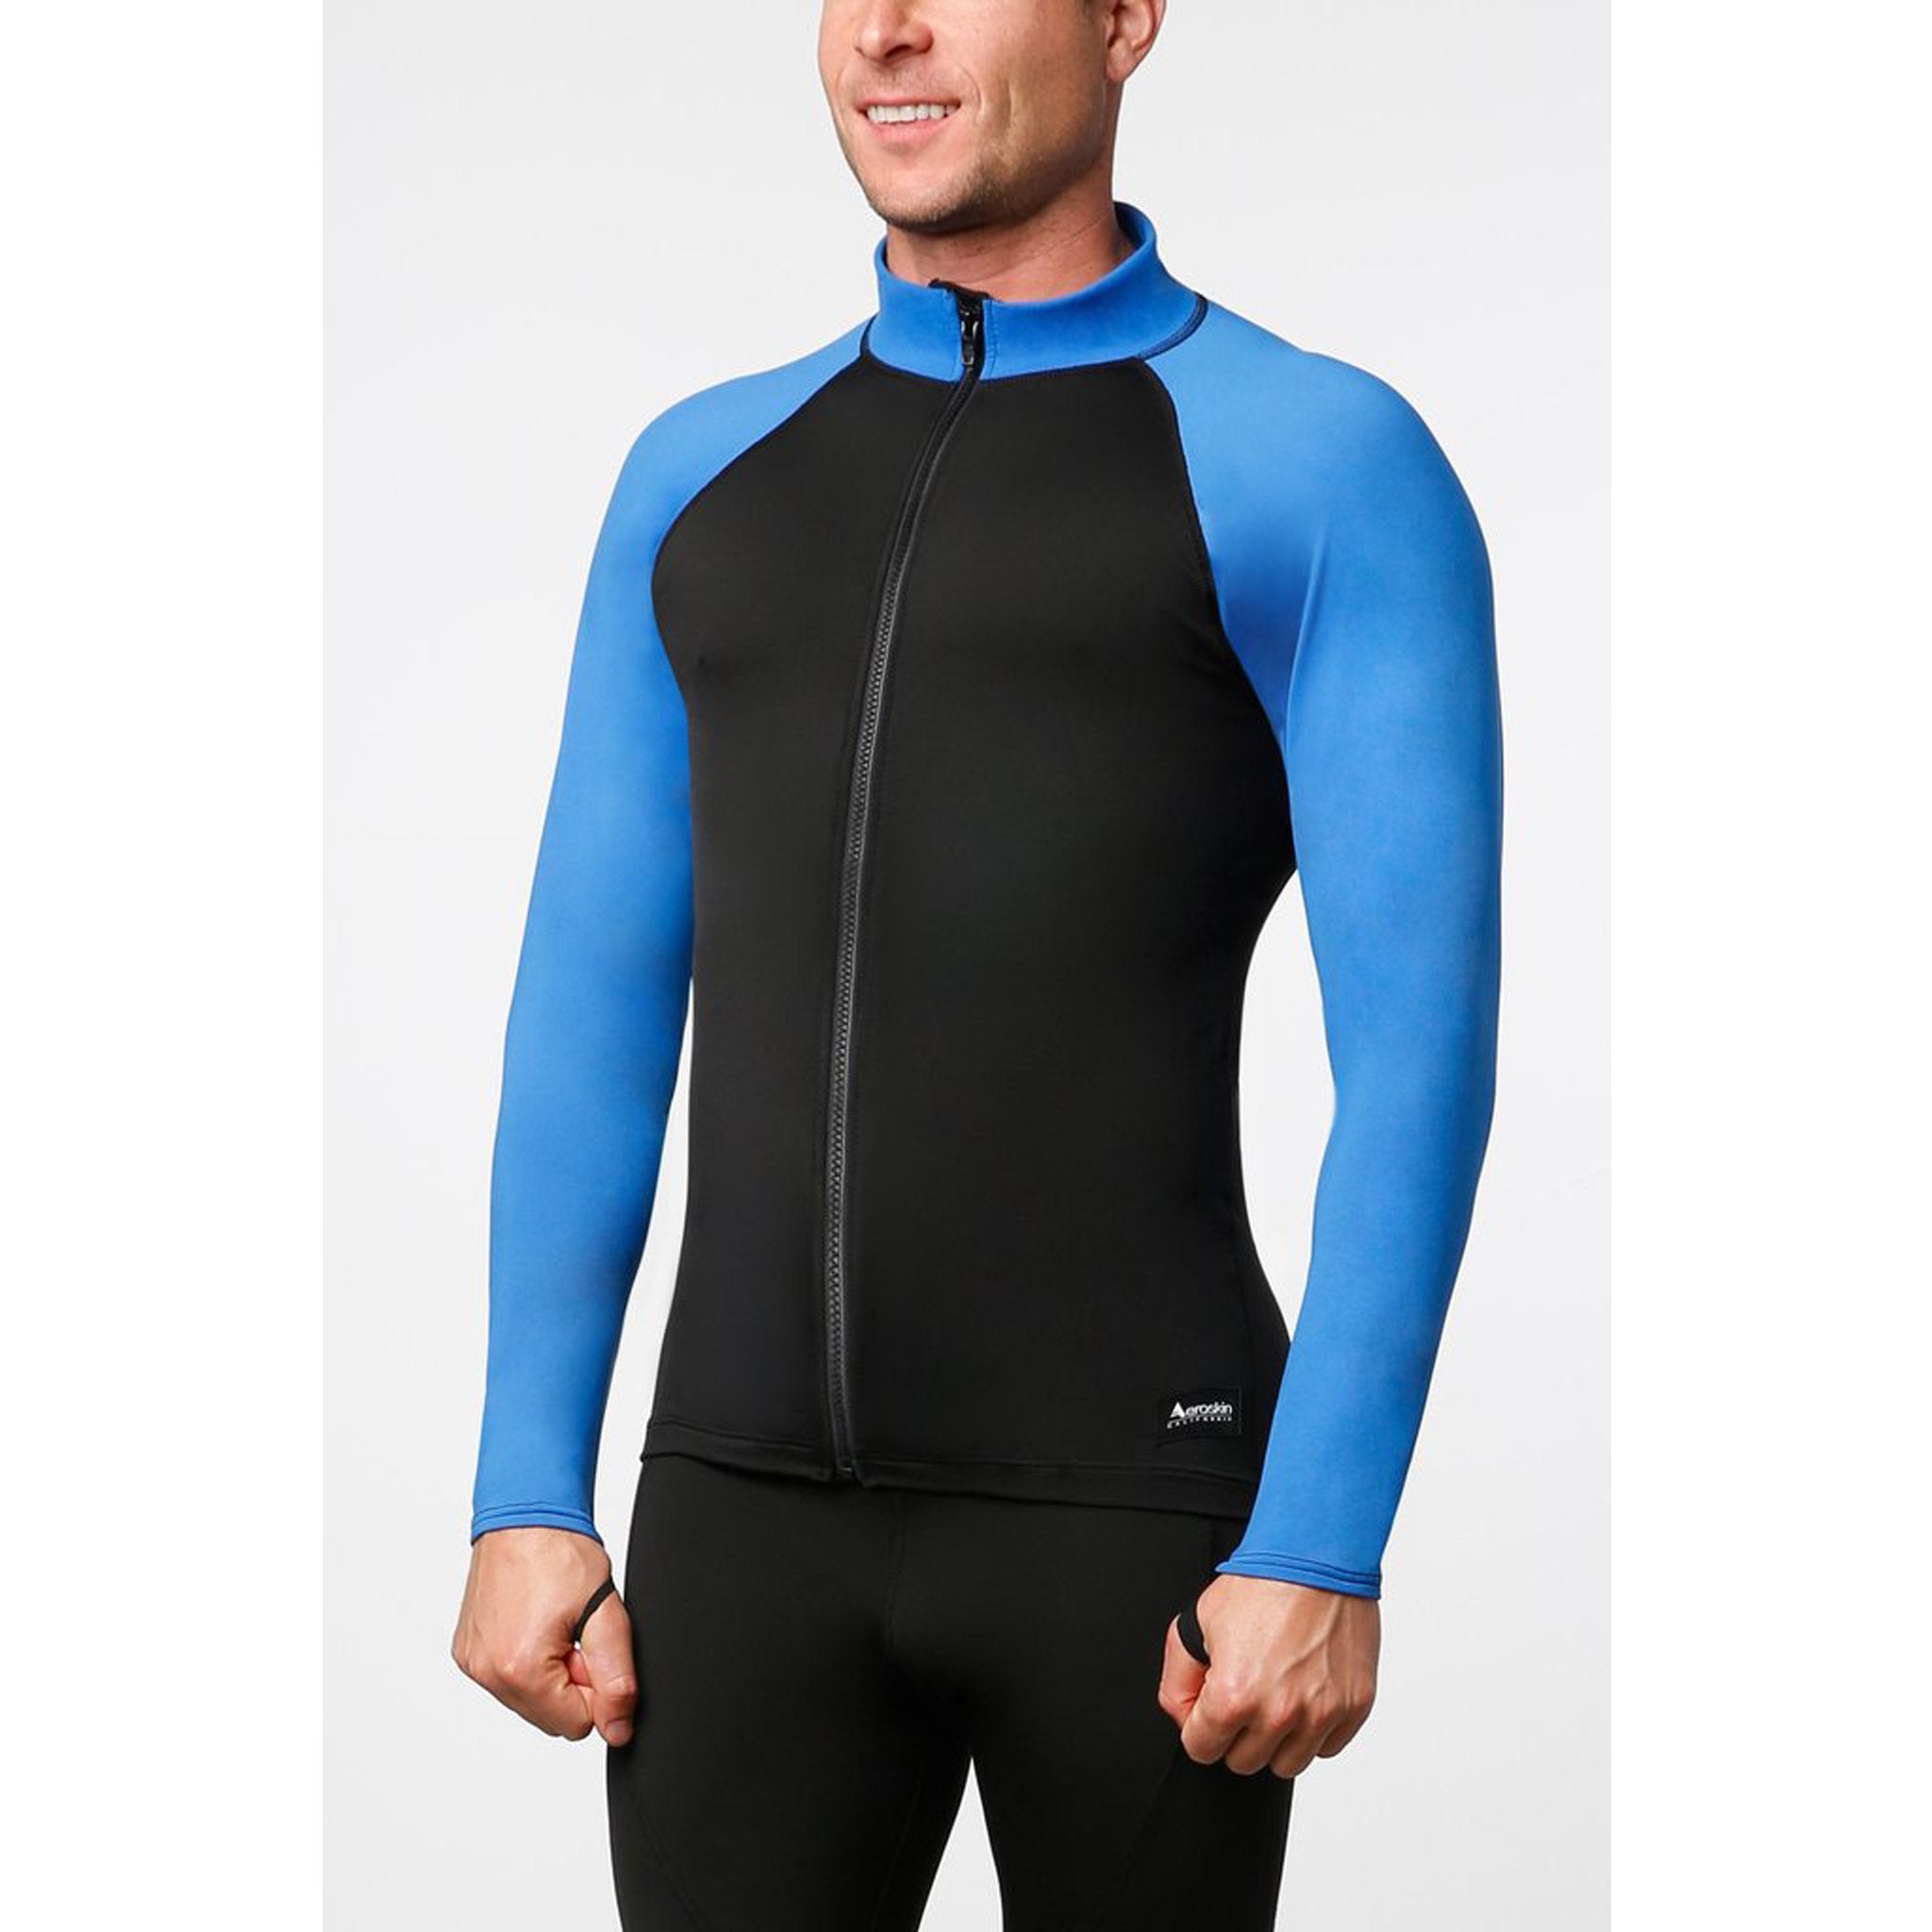 P35C Raglan Long Sleeve Vest With Fuzzy Collar & Front Zip (Unisex)-Top-wetsuit, diver, sharkskin, snorkeling gear, watersports equipment, diving fins, snorkeling mask, ocean reef, Garmin G1